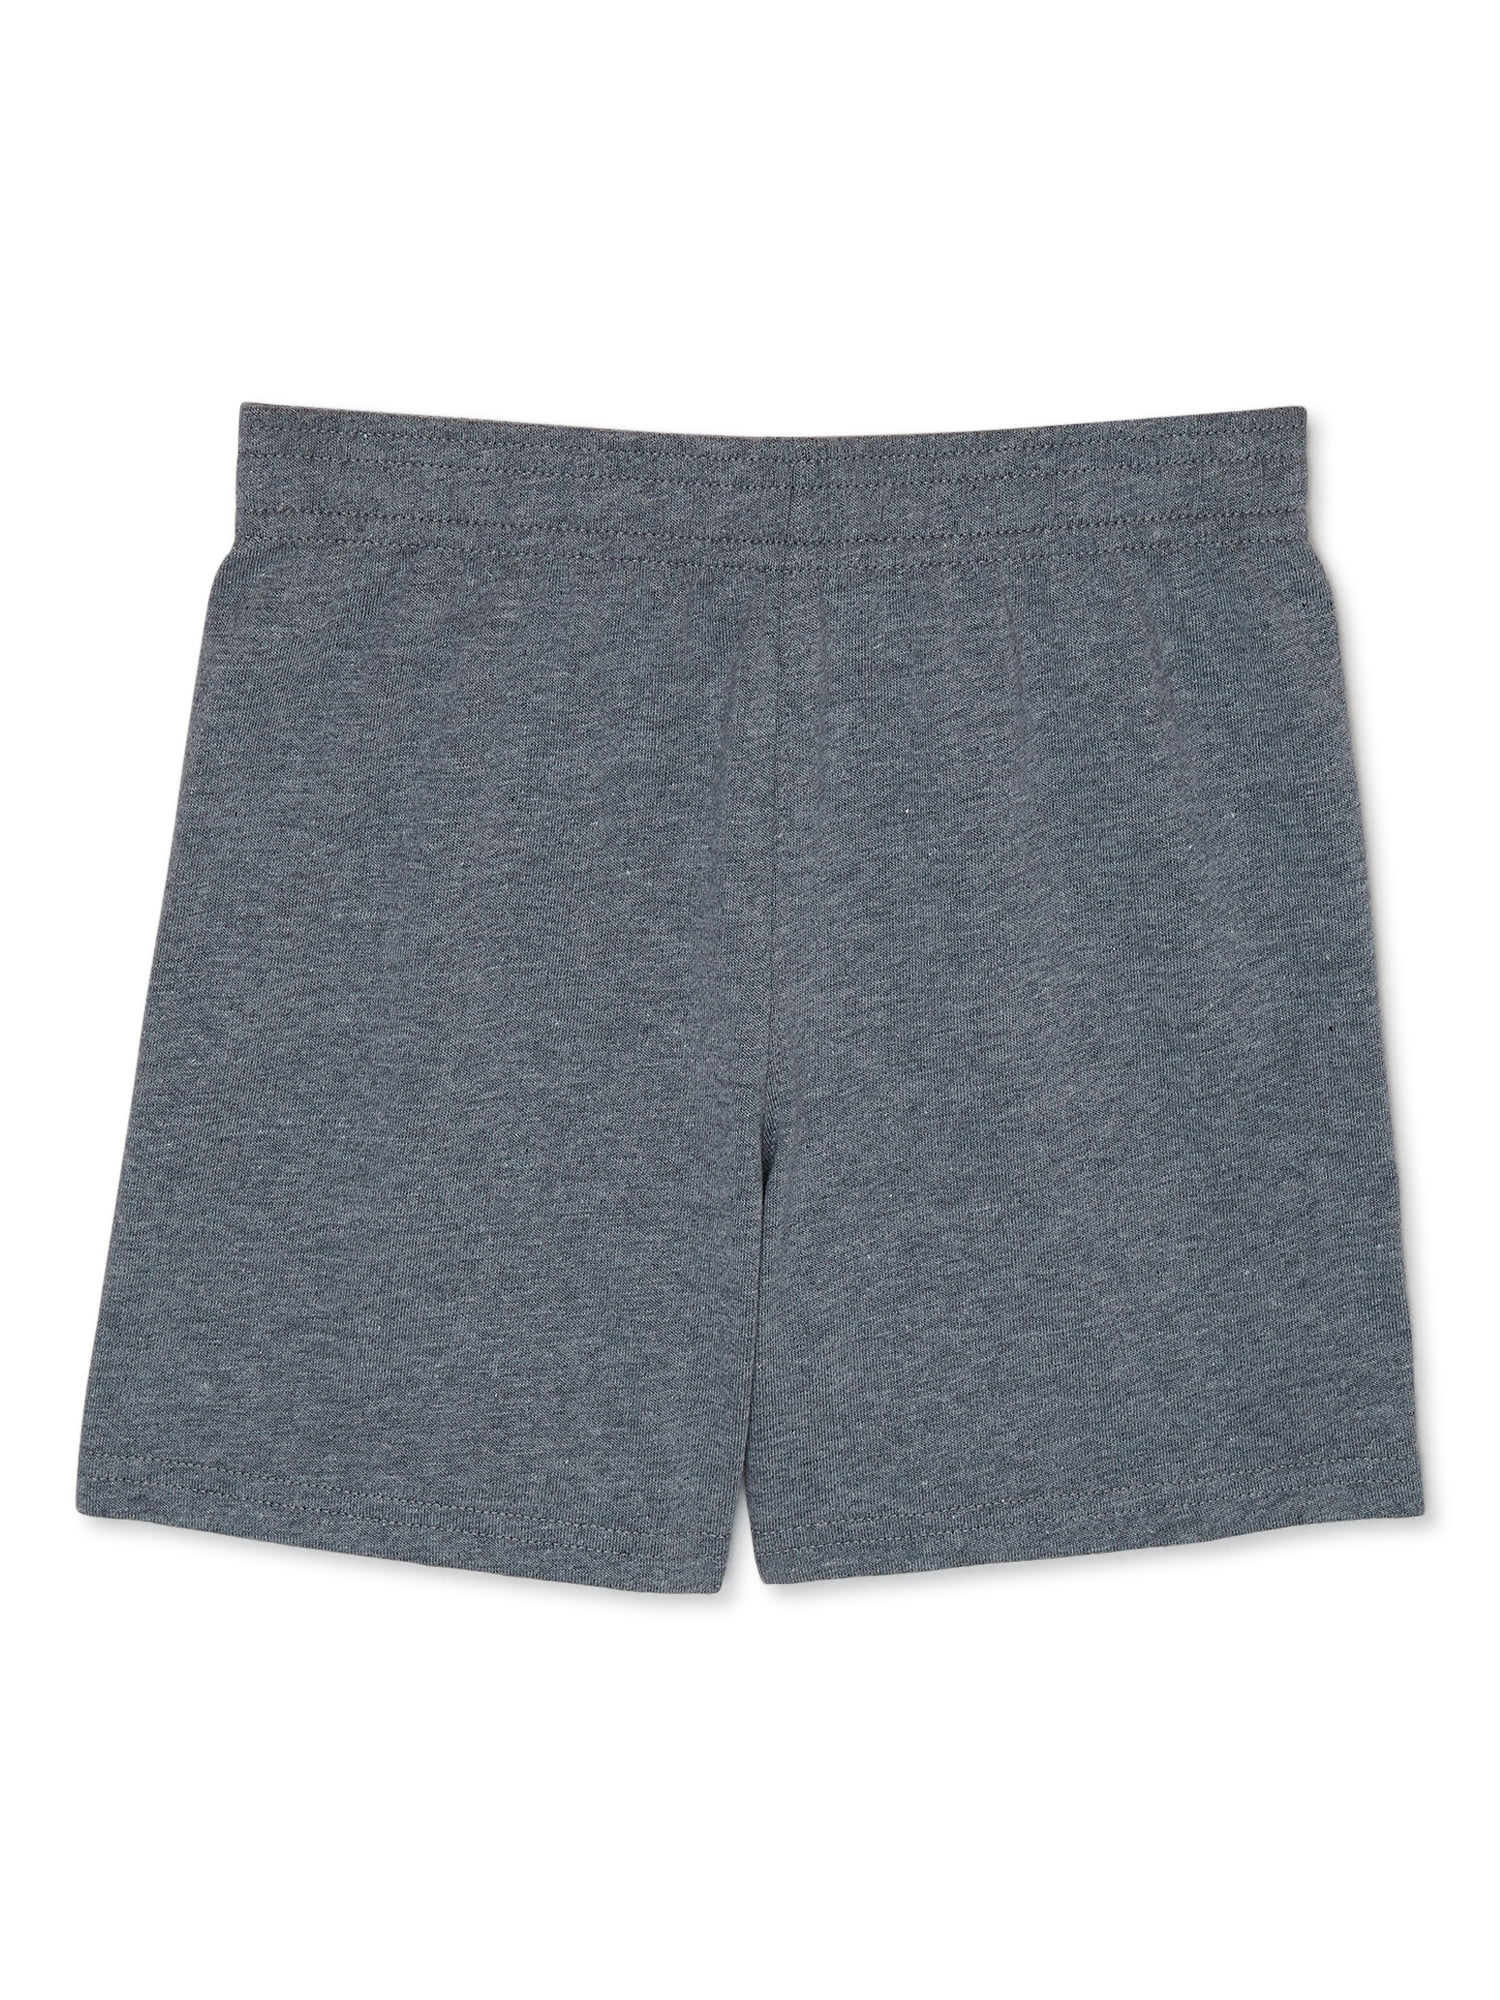 Garanimals Toddler Boy Solid Jersey Shorts, Sizes 18M-5T - Walmart.com